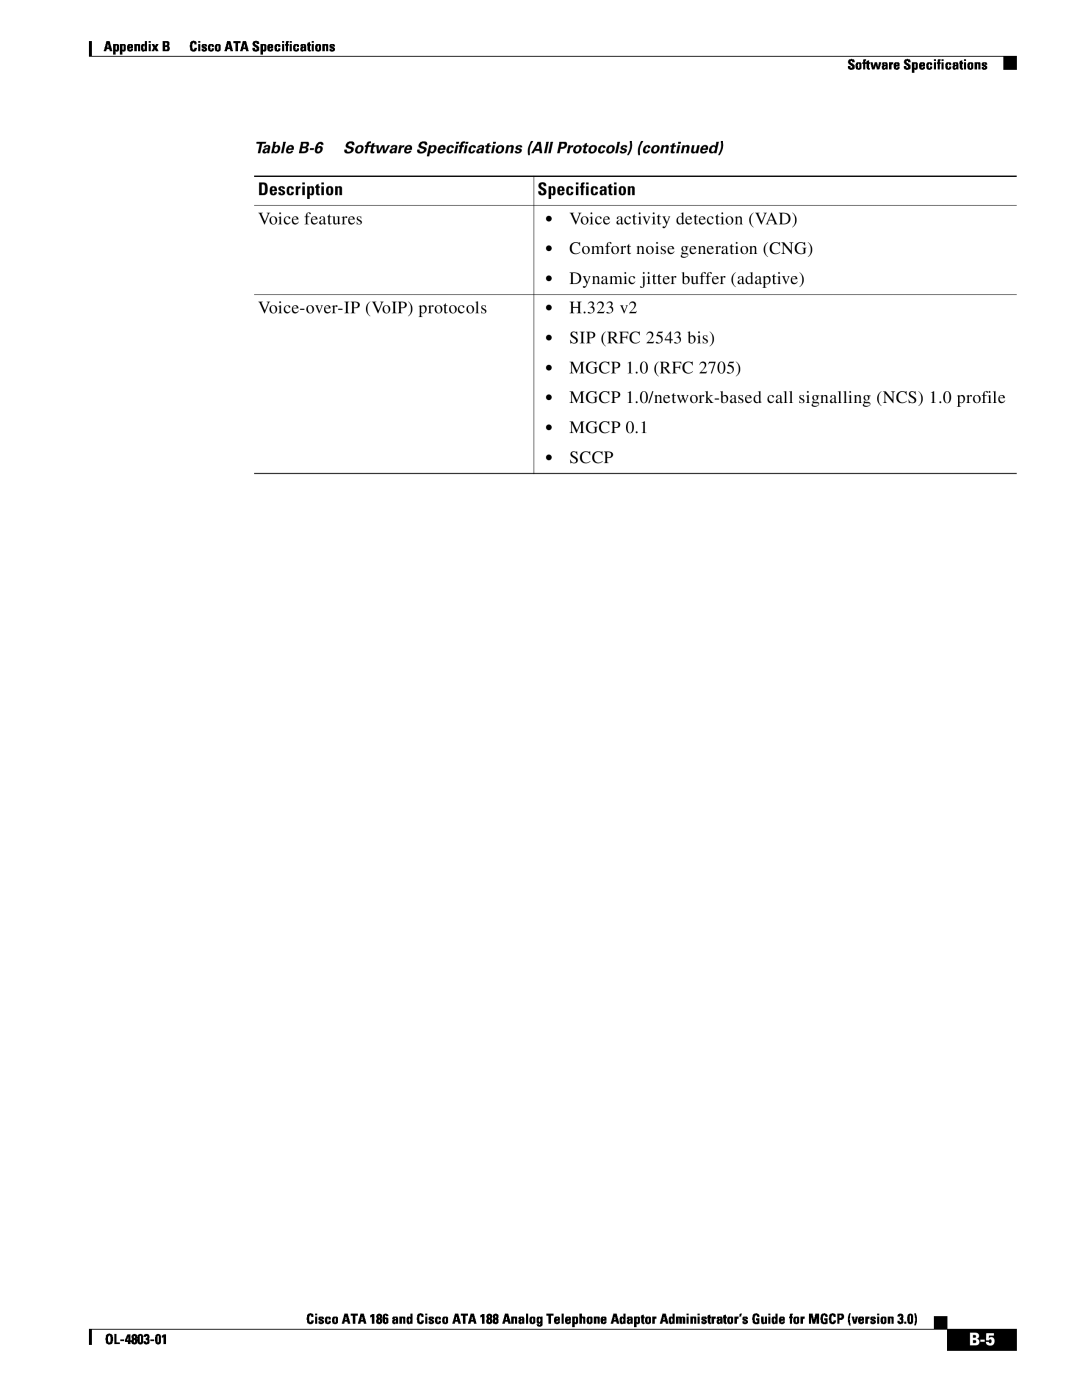 Cisco Systems ATA 186 manual Description, Specification 